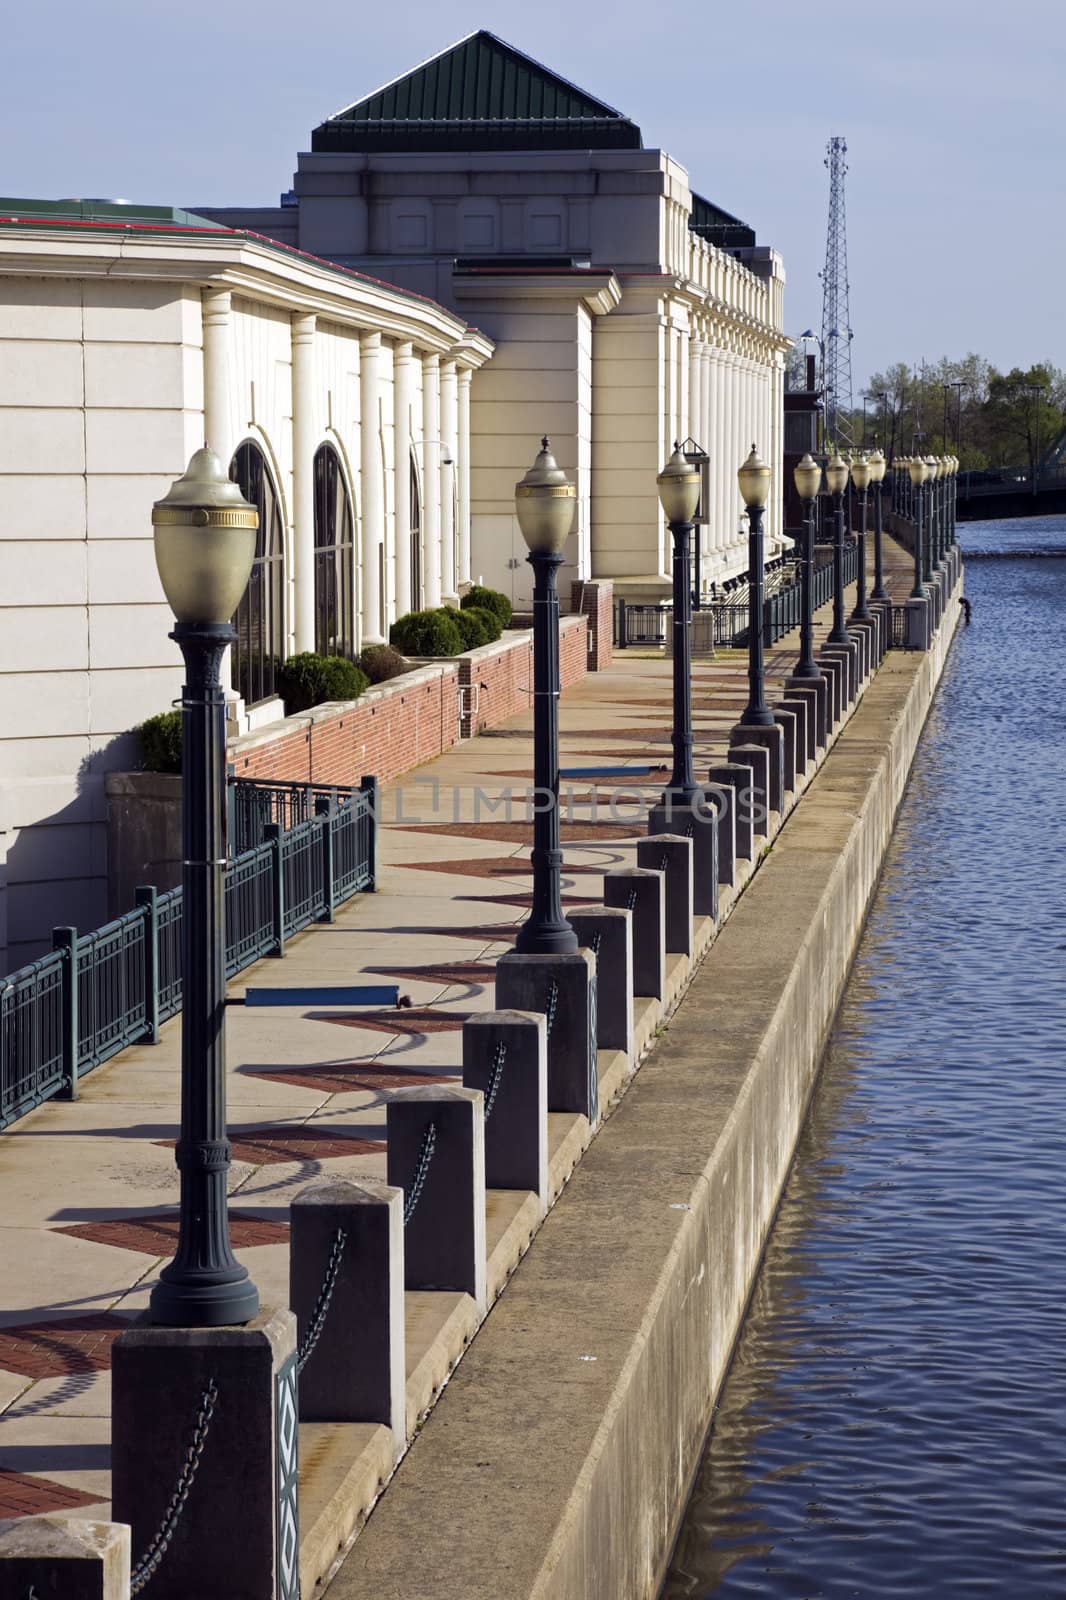 Riverwalk in downtown of Joliet, Illinois, USA.